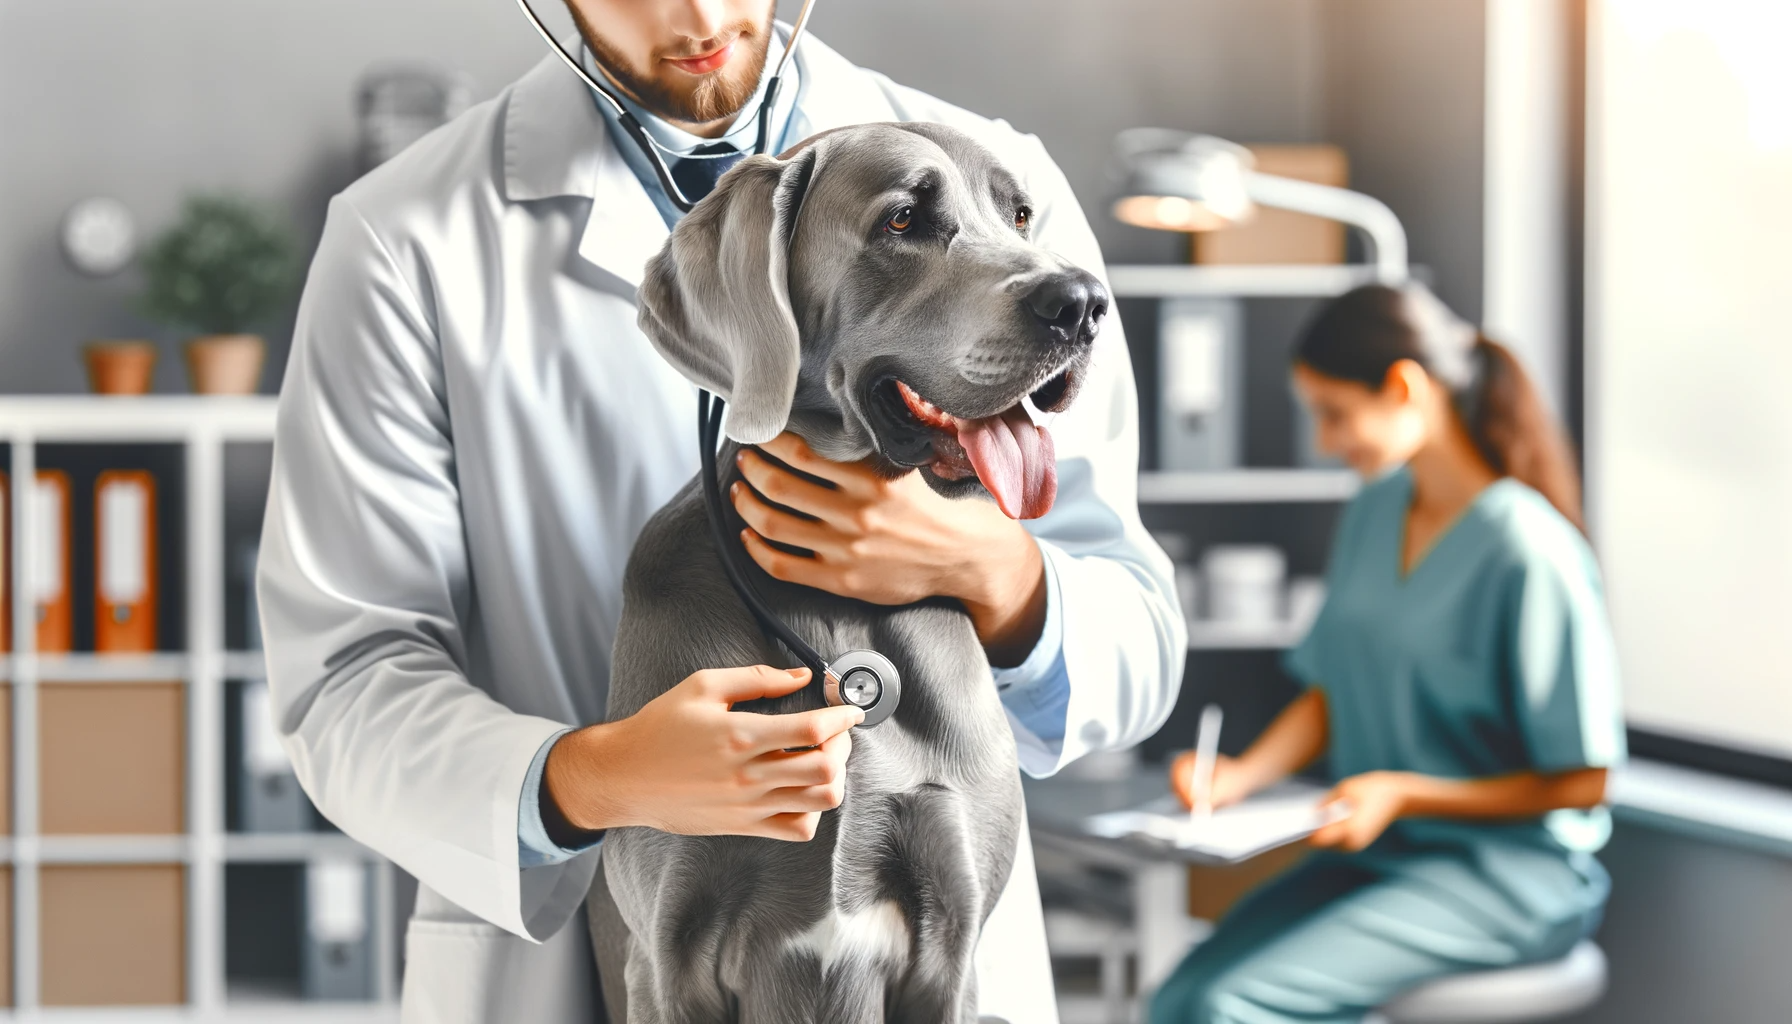 Greyador sitting calmly during a vet examination